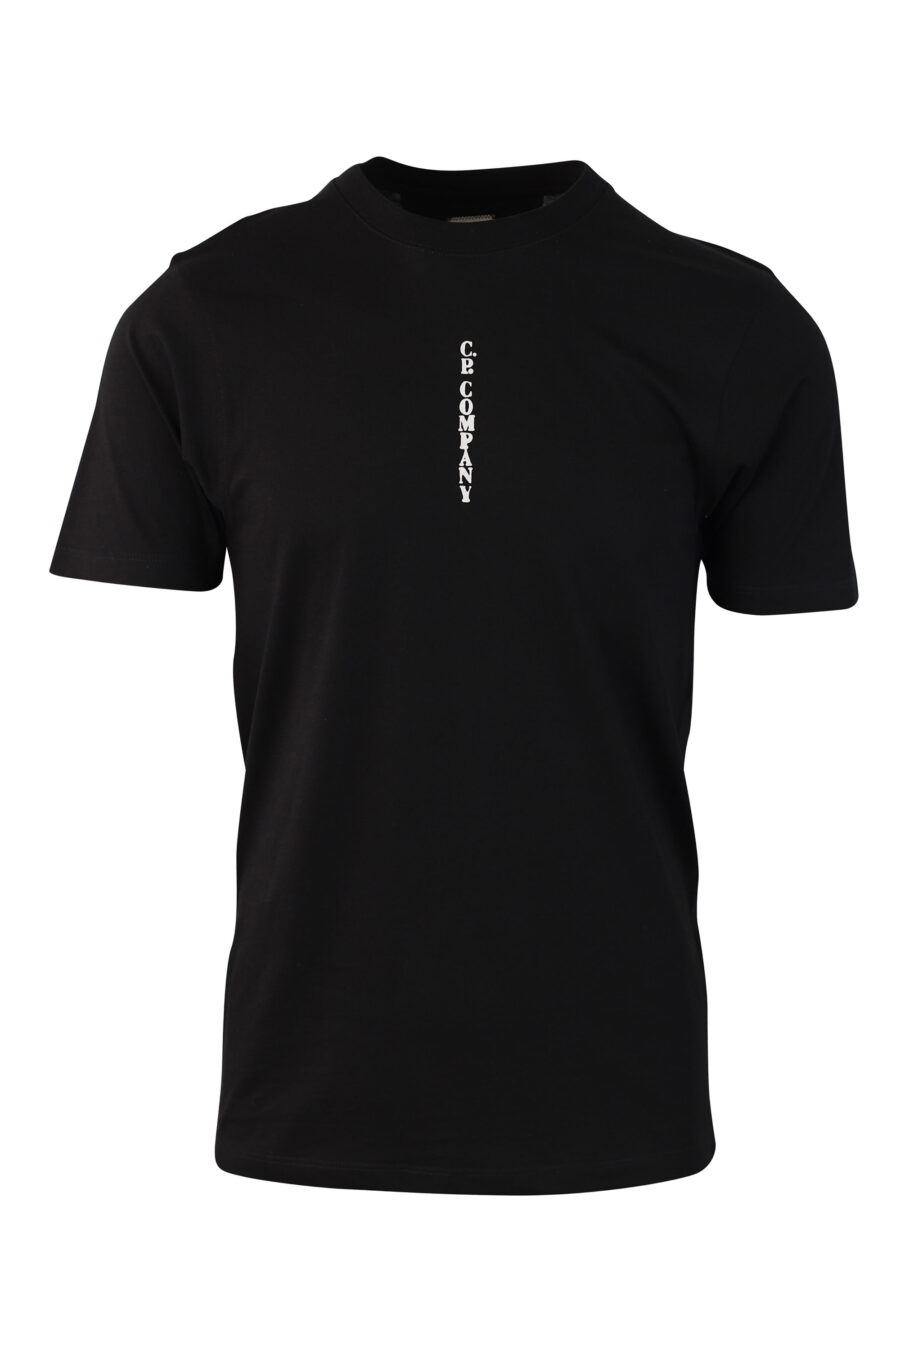 Camiseta negra con minilogo vertical - IMG 9849